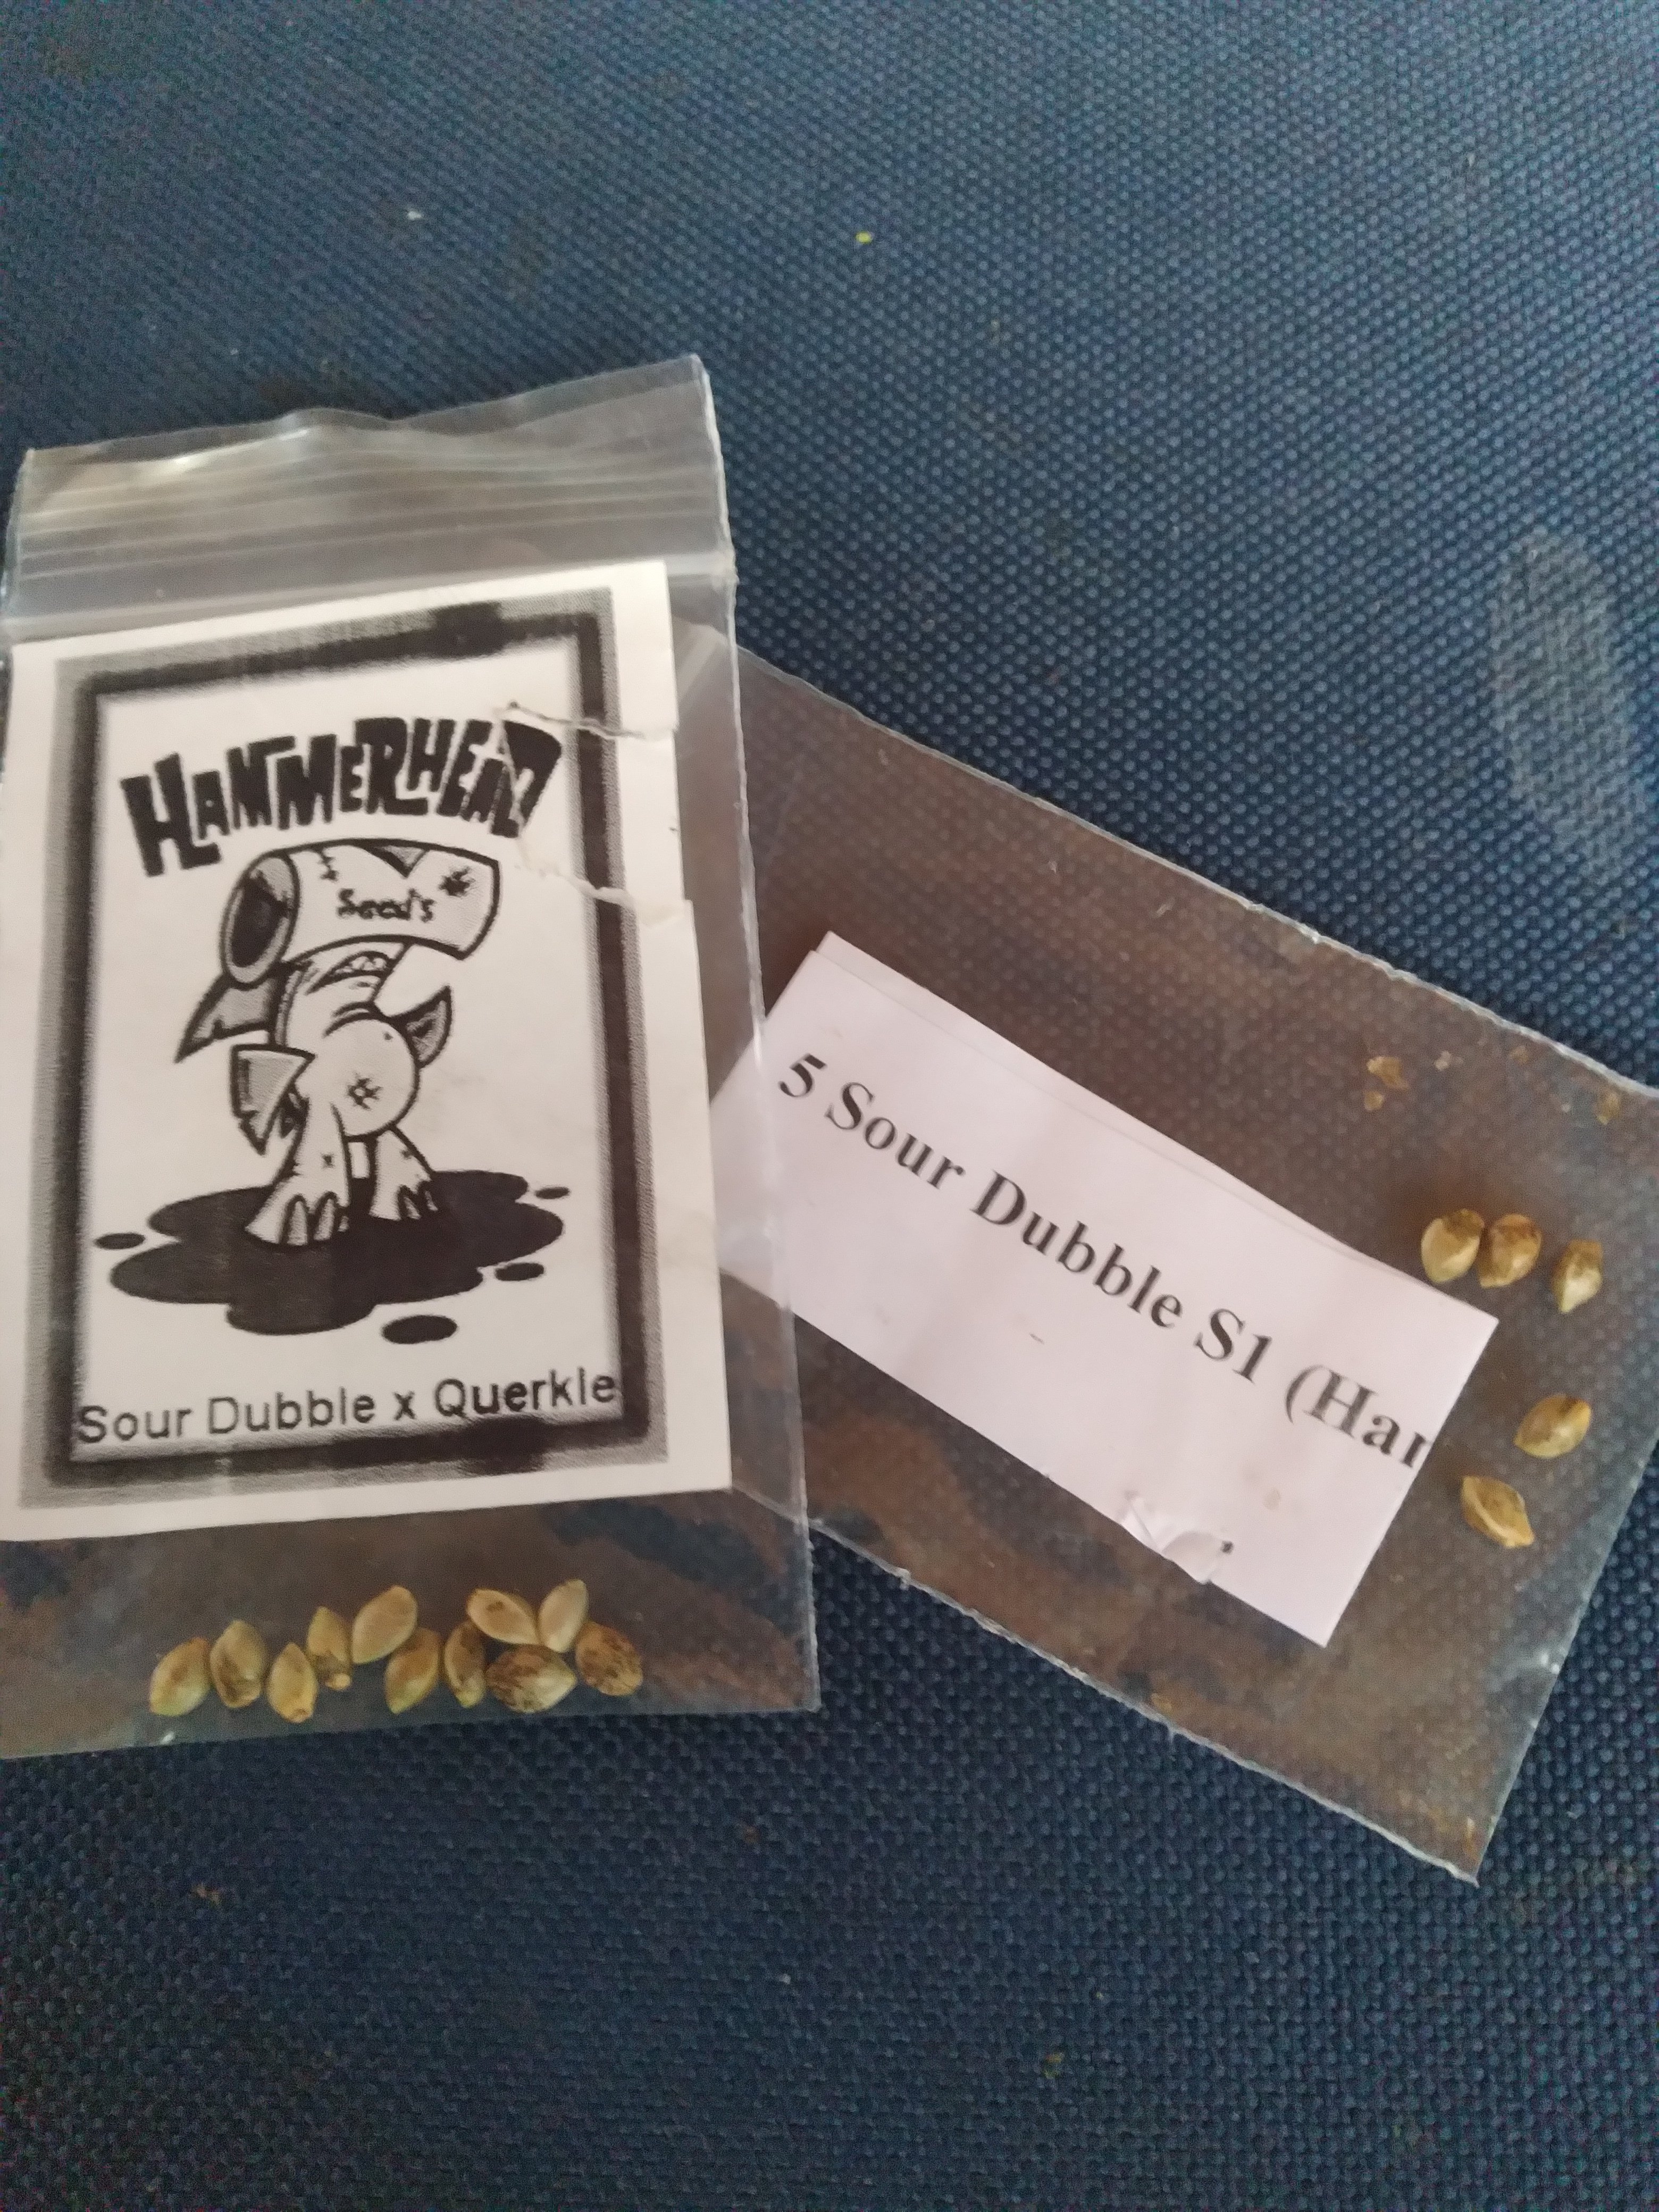 Hammerhead beans - Copy.jpg